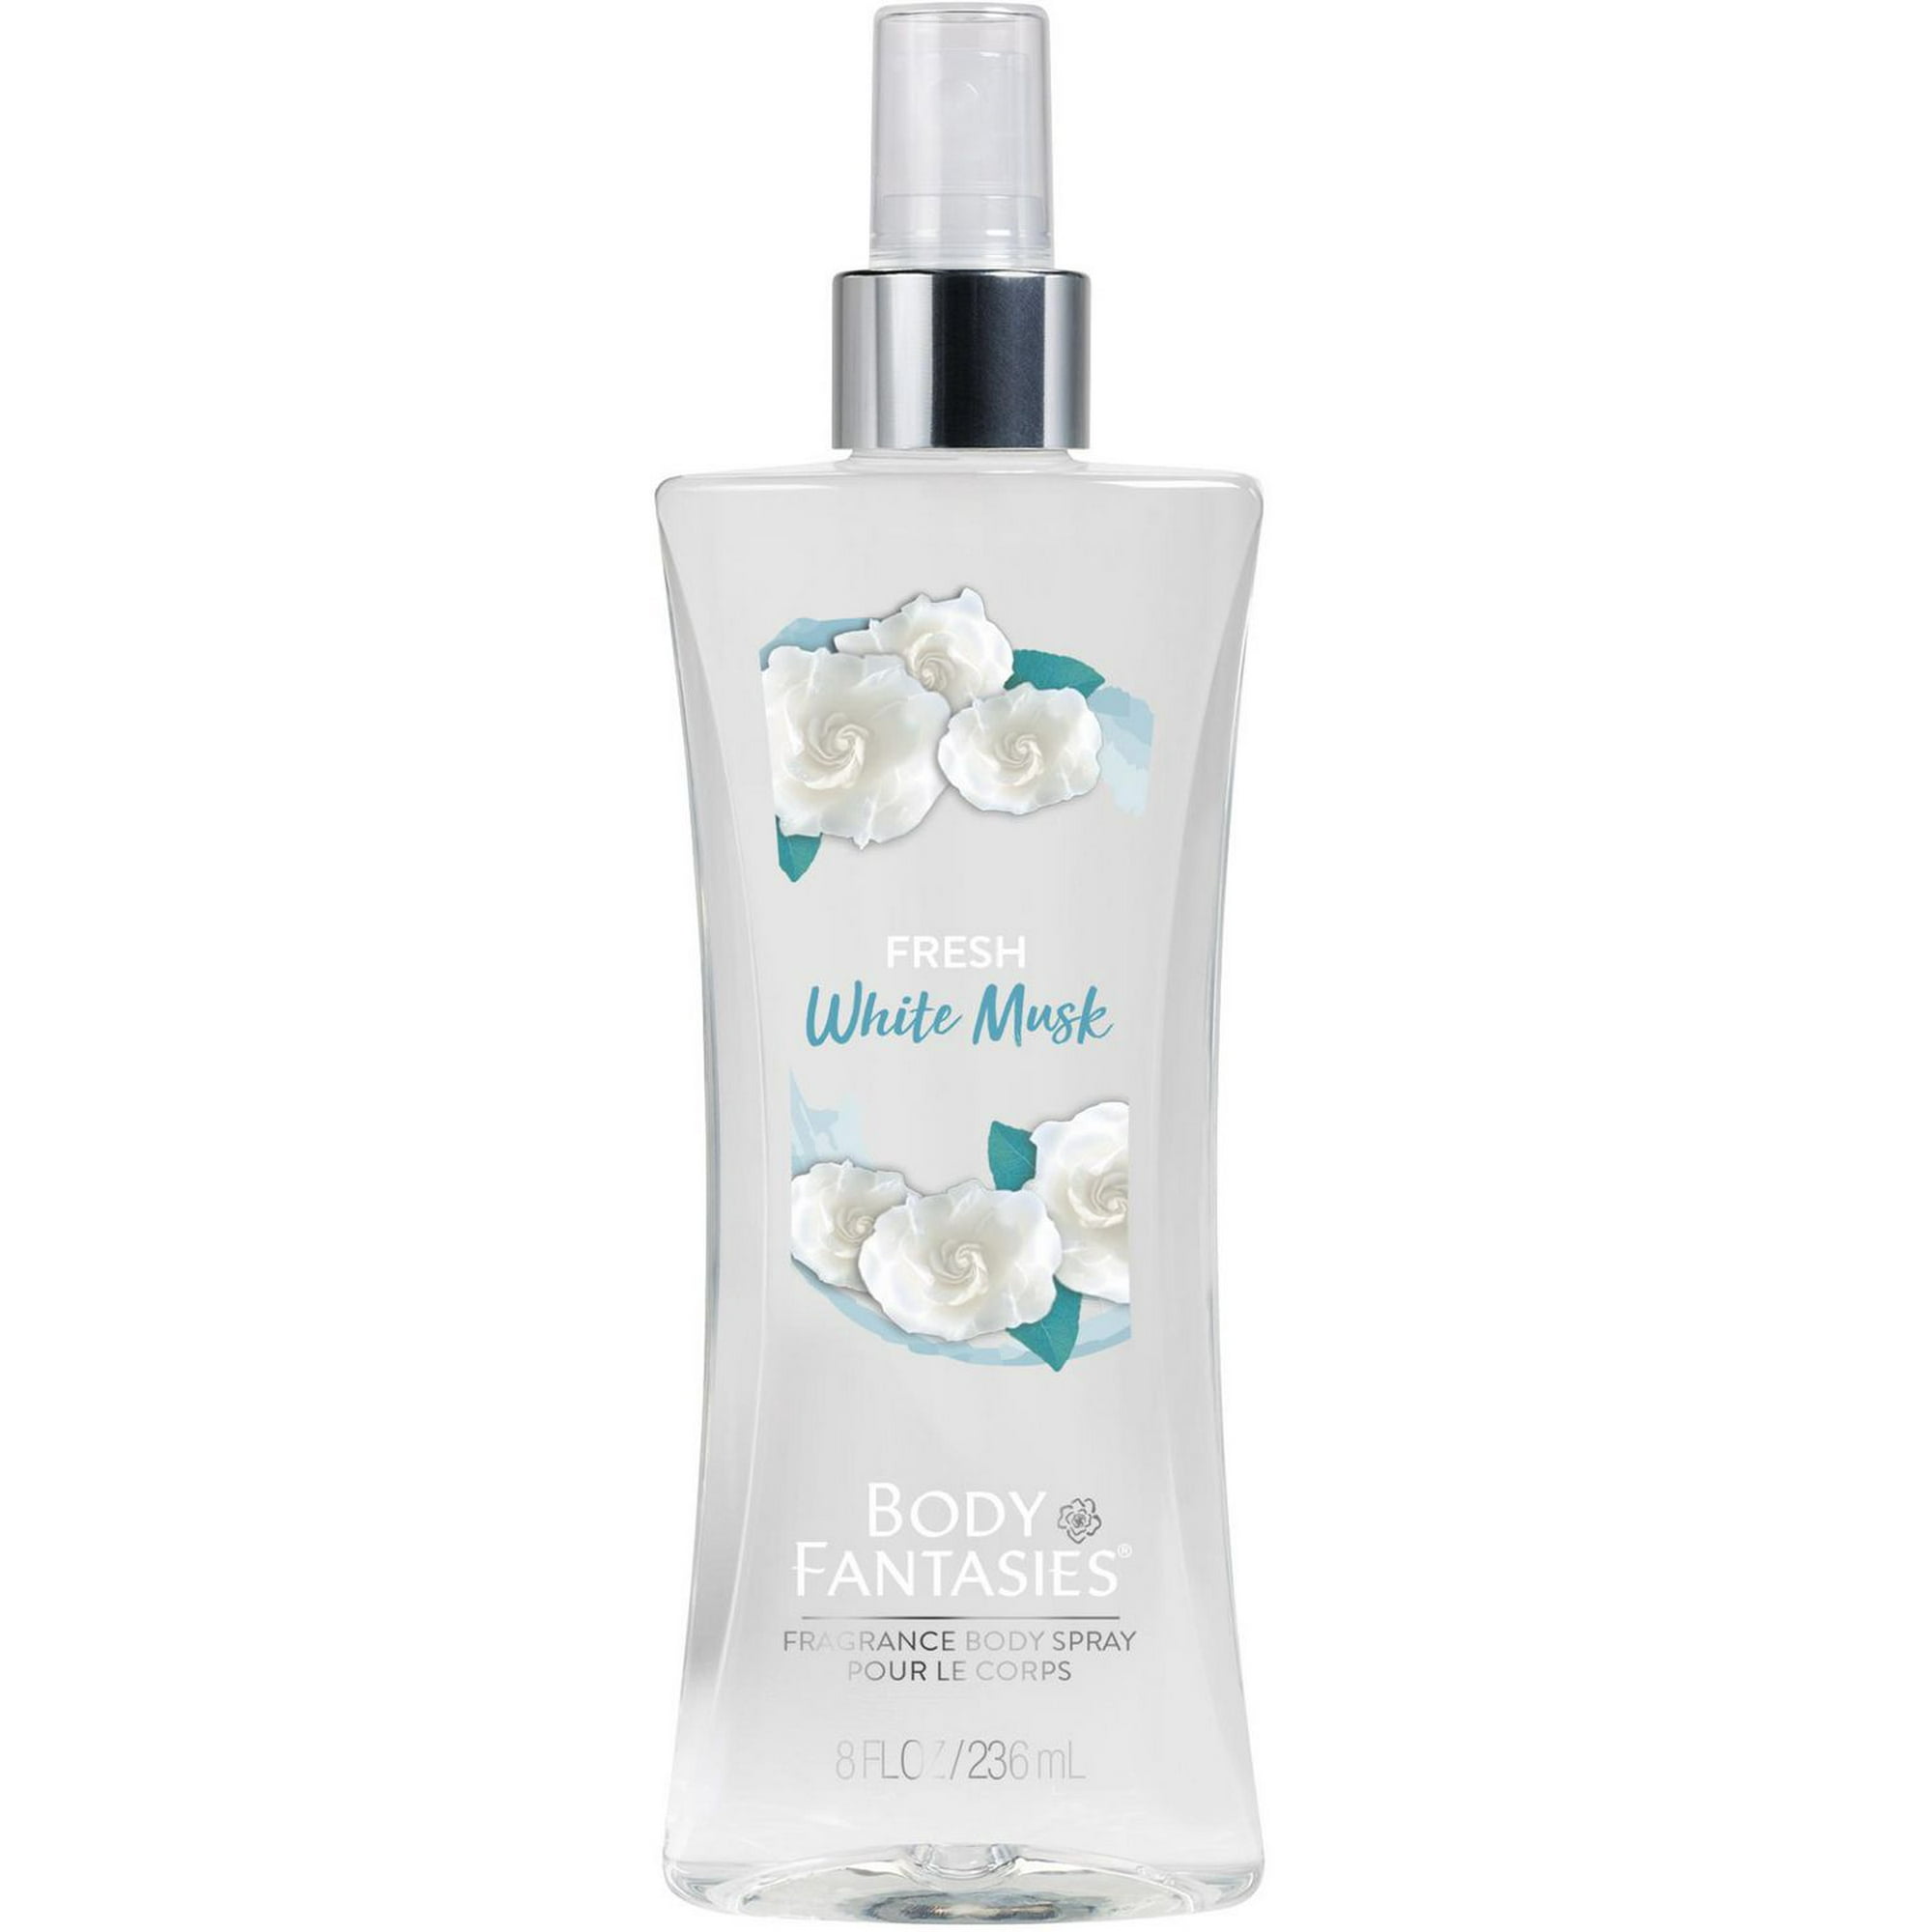 White Musk Body Shop Perfume Oil 2024